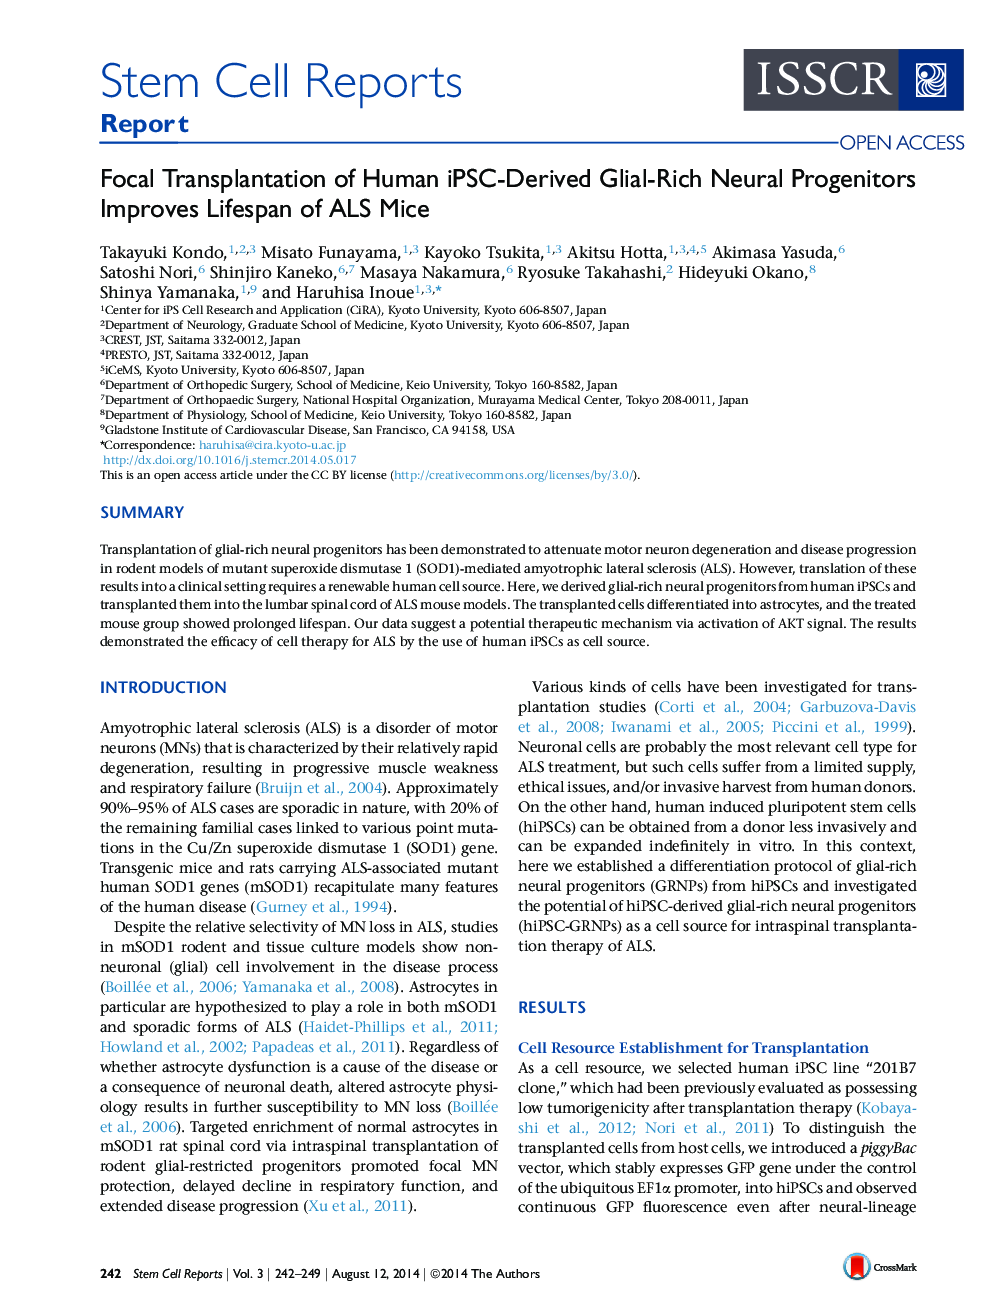 Focal Transplantation of Human iPSC-Derived Glial-Rich Neural Progenitors Improves Lifespan of ALS Mice 